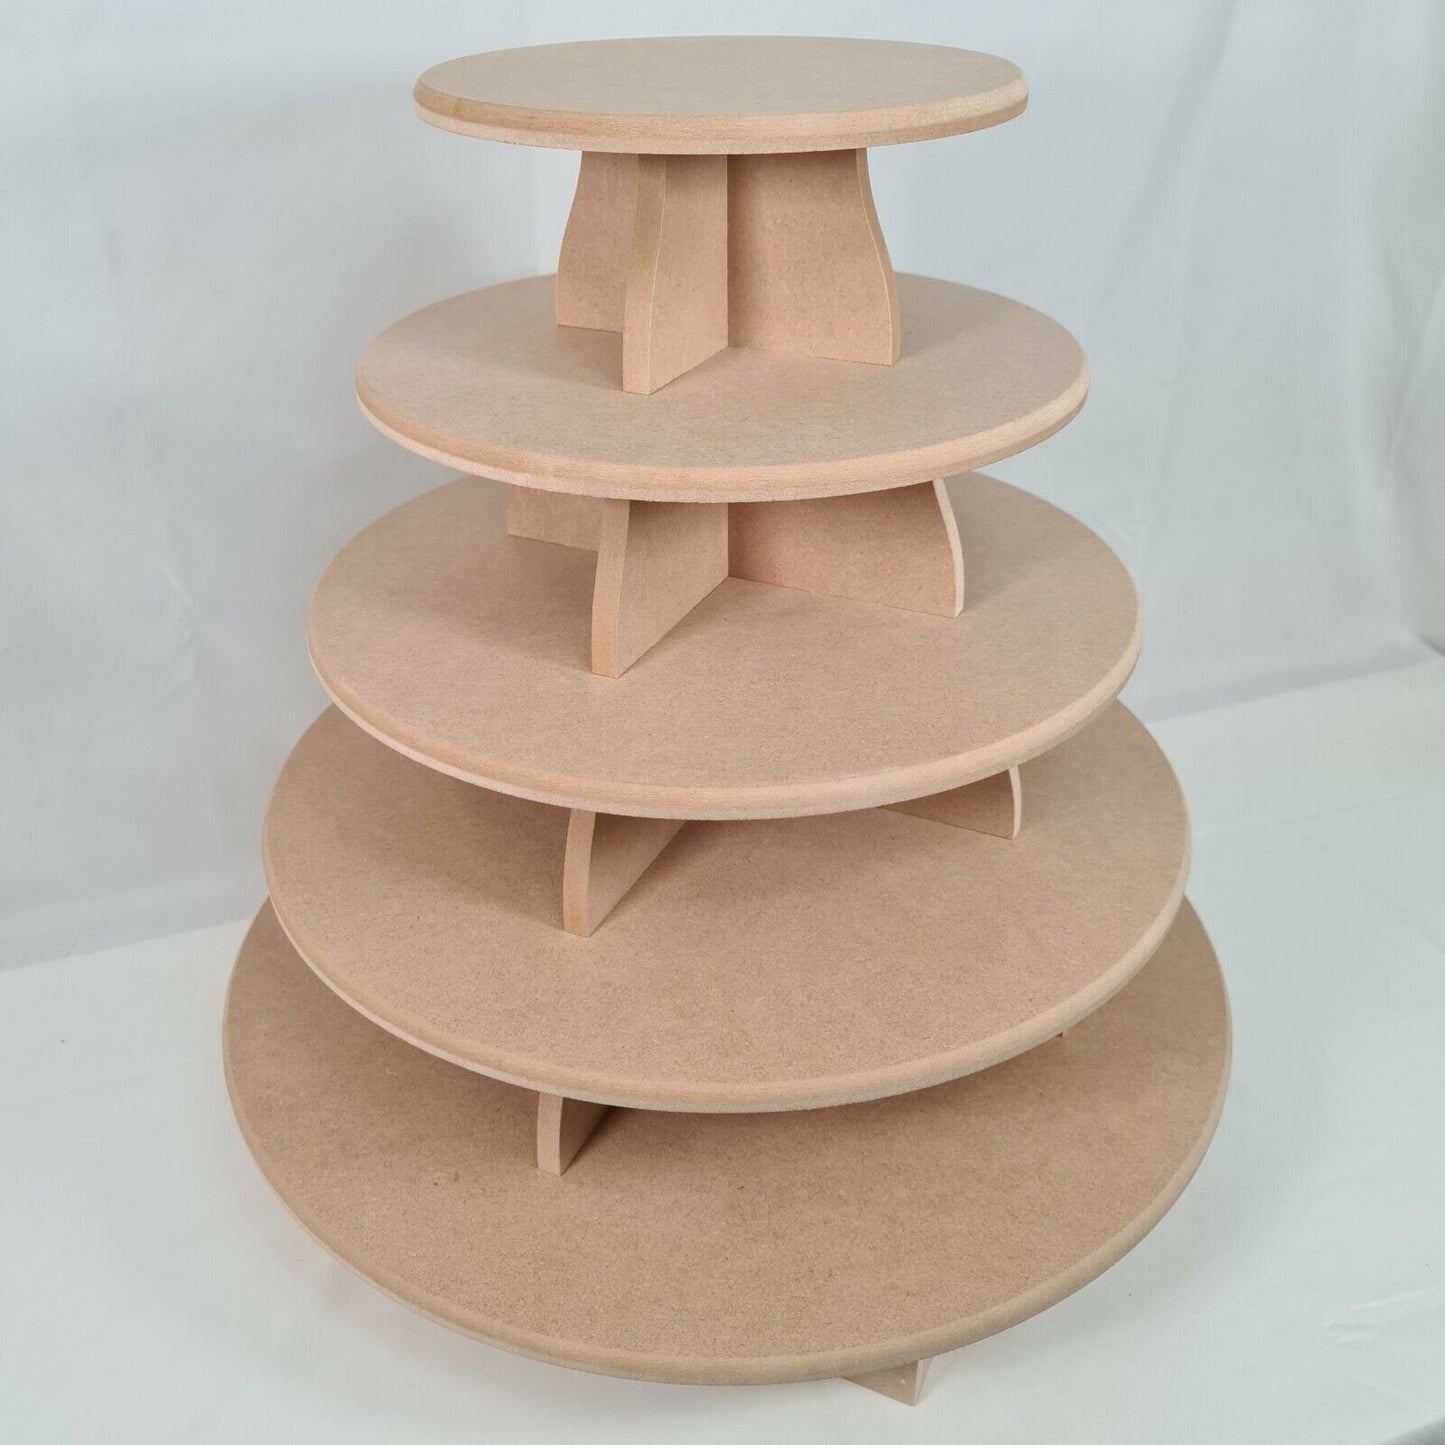 Cupcake / Fairy Cake Stand - Circular Shaped